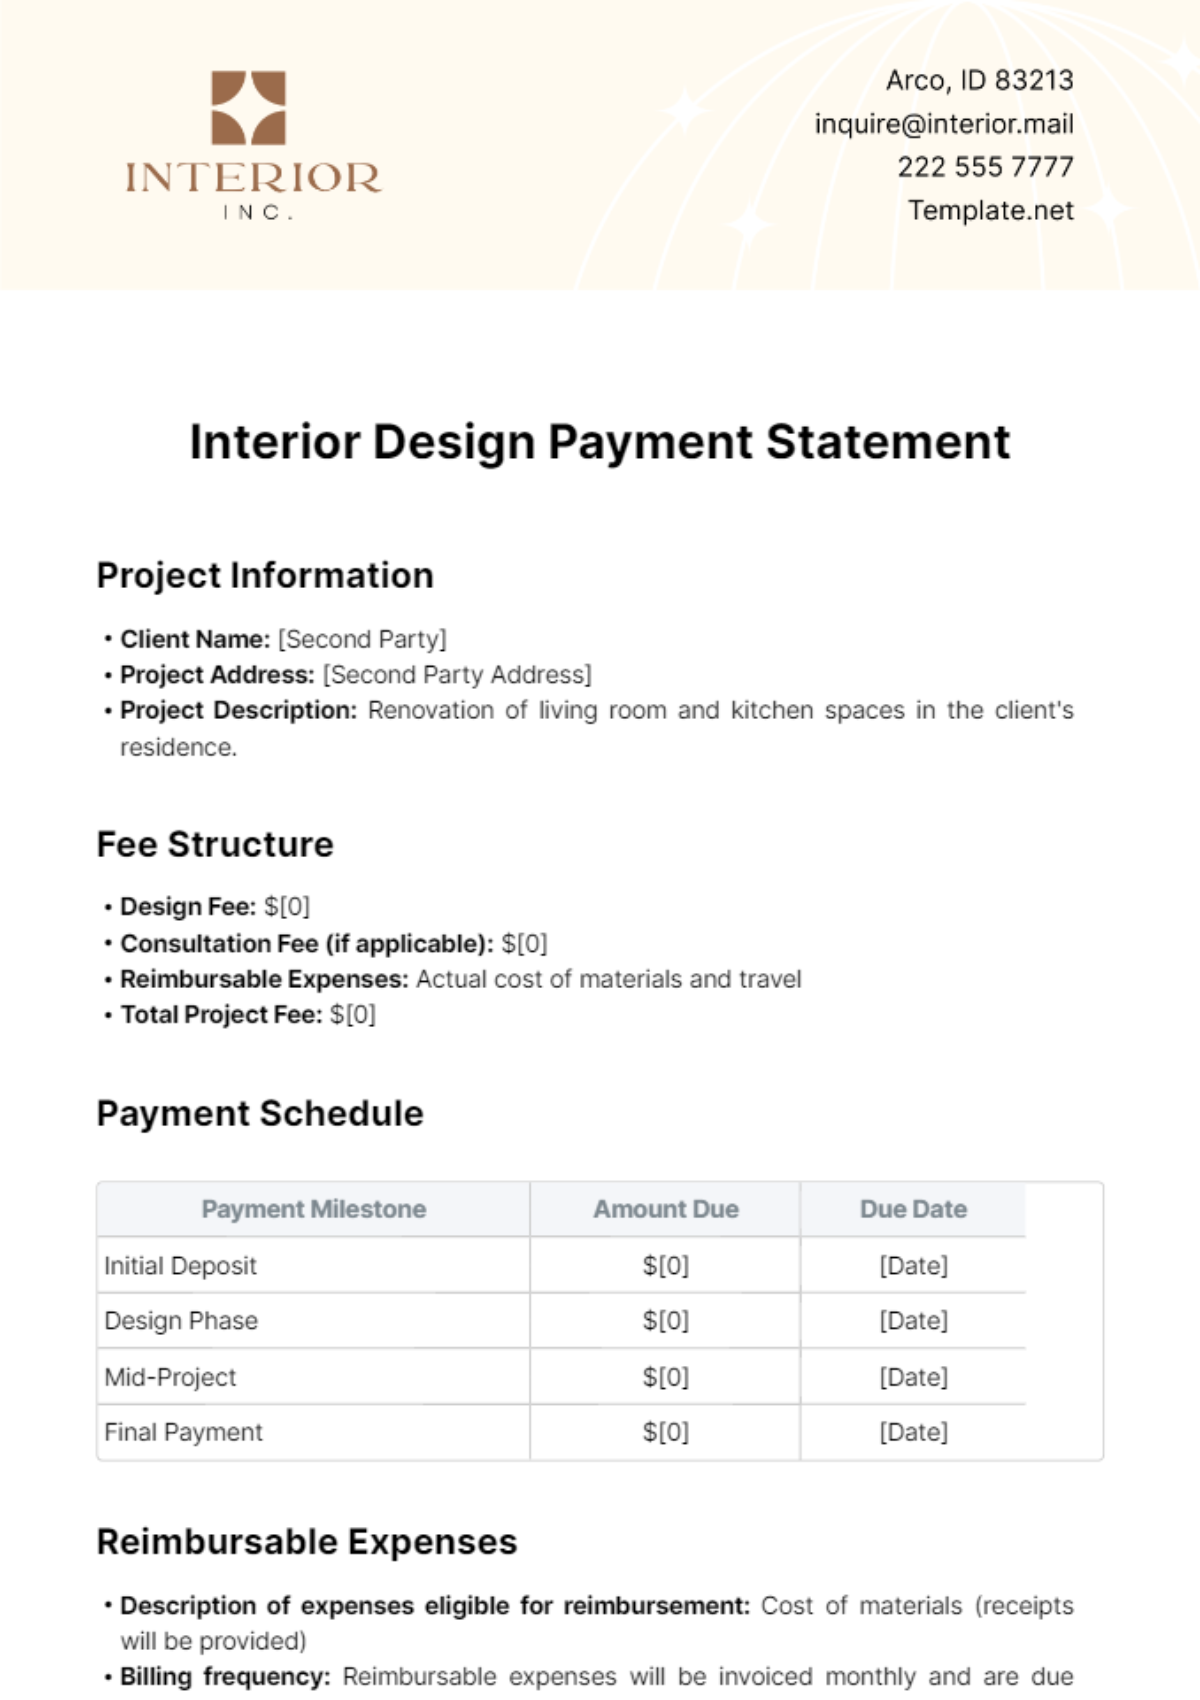 Interior Design Payment Statement Template